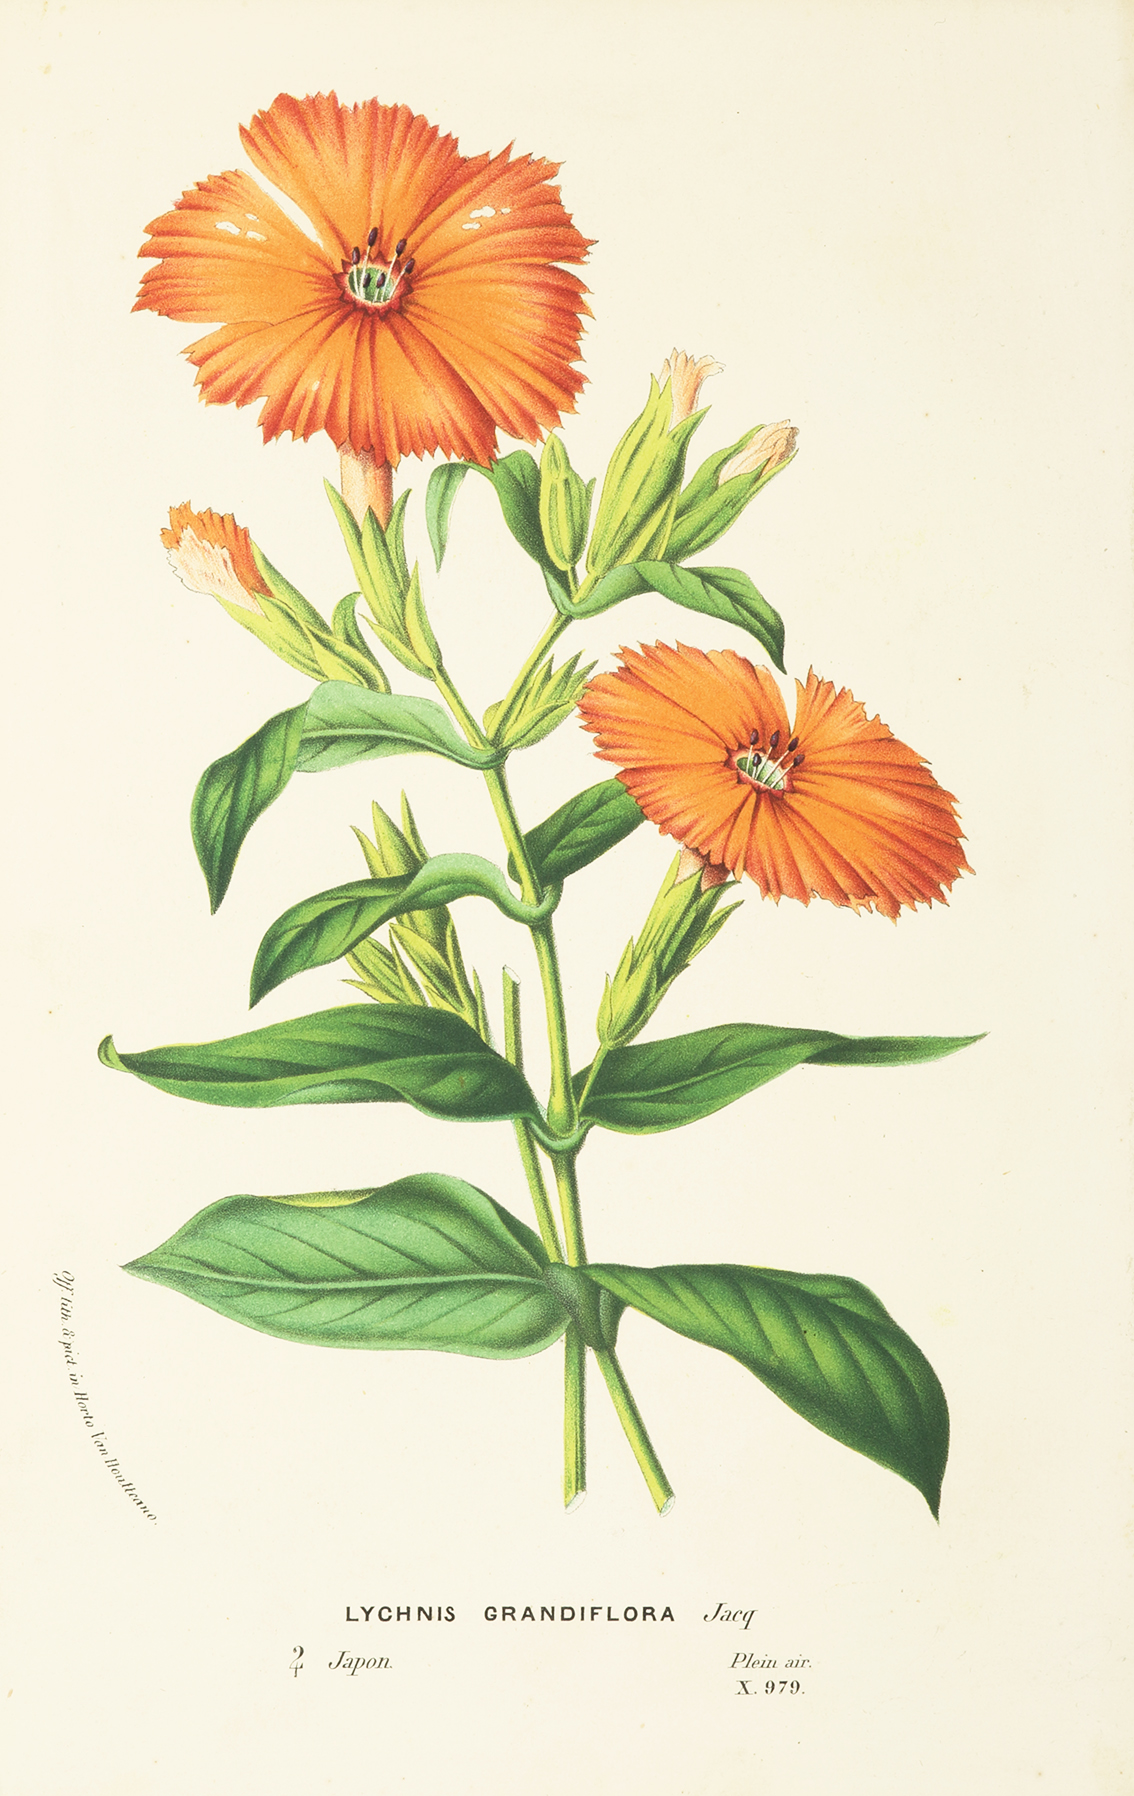 Lychnis Grandiflora - Antique Print from 1883